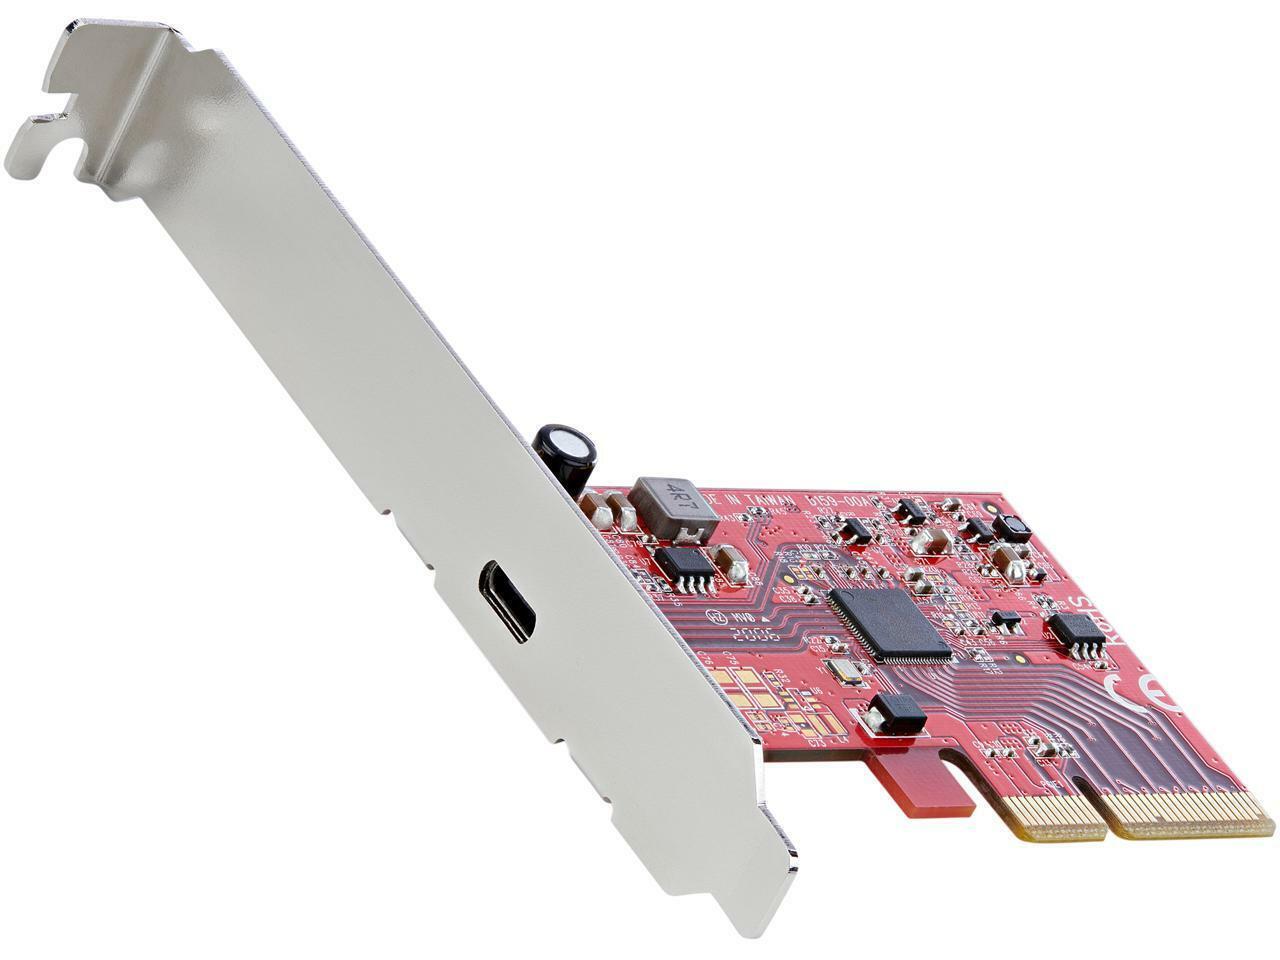 StarTech.com PEXUSB321C 1-Port USB 3.2 Gen 2x2 PCIe Card - USB-C SuperSpeed 20Gb